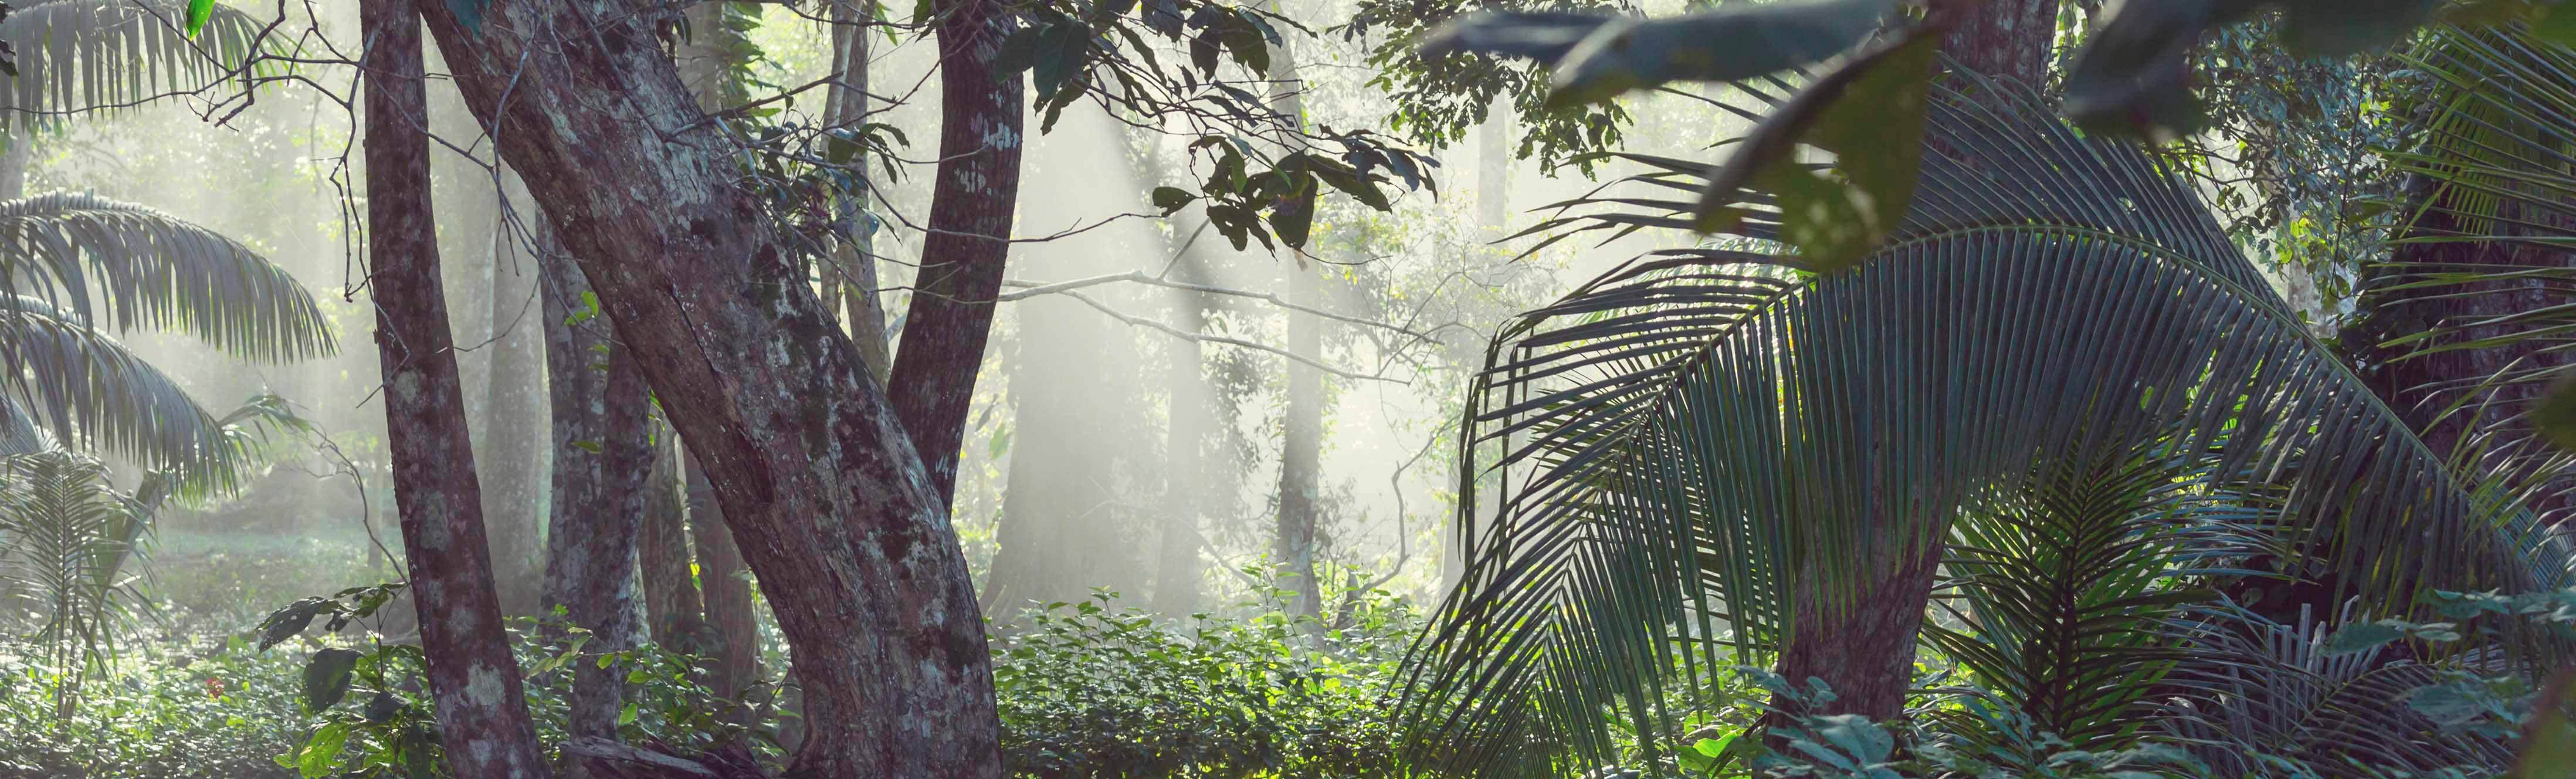 Costa Rica, pioner en energies renovables, sostenibilitat i ecoturisme.